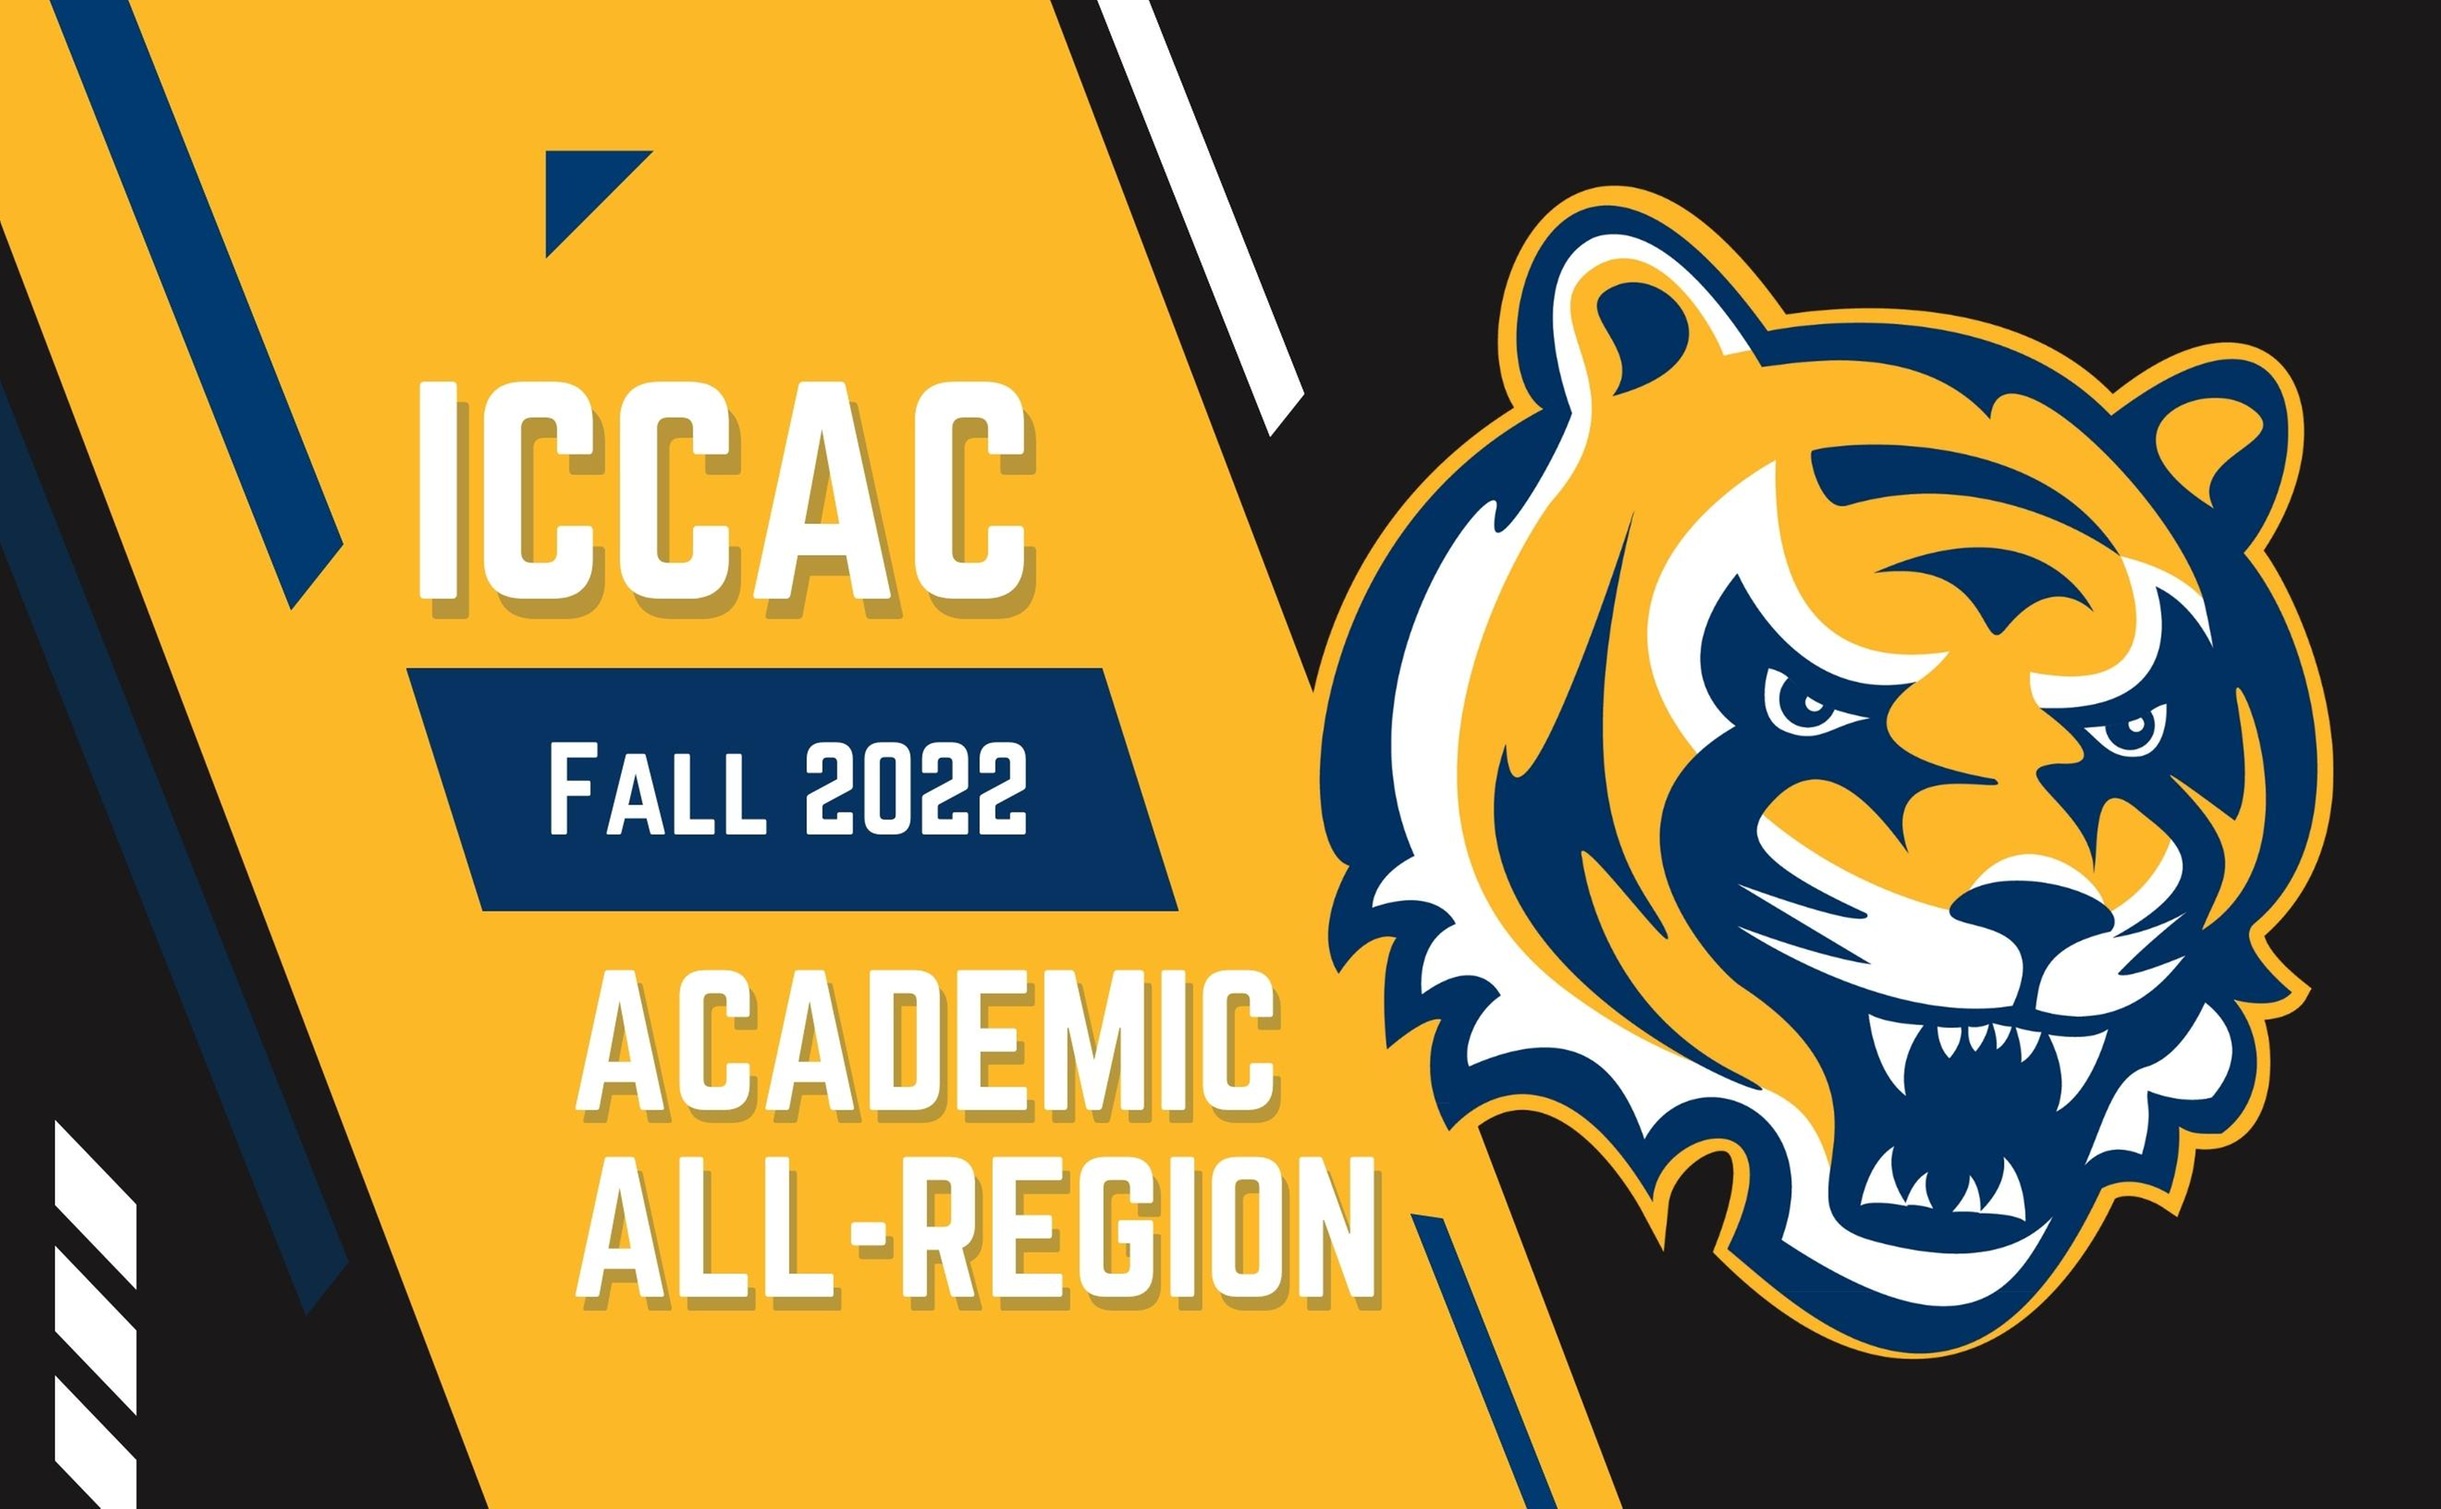 MCC Athletics announces Academic All-Region honors